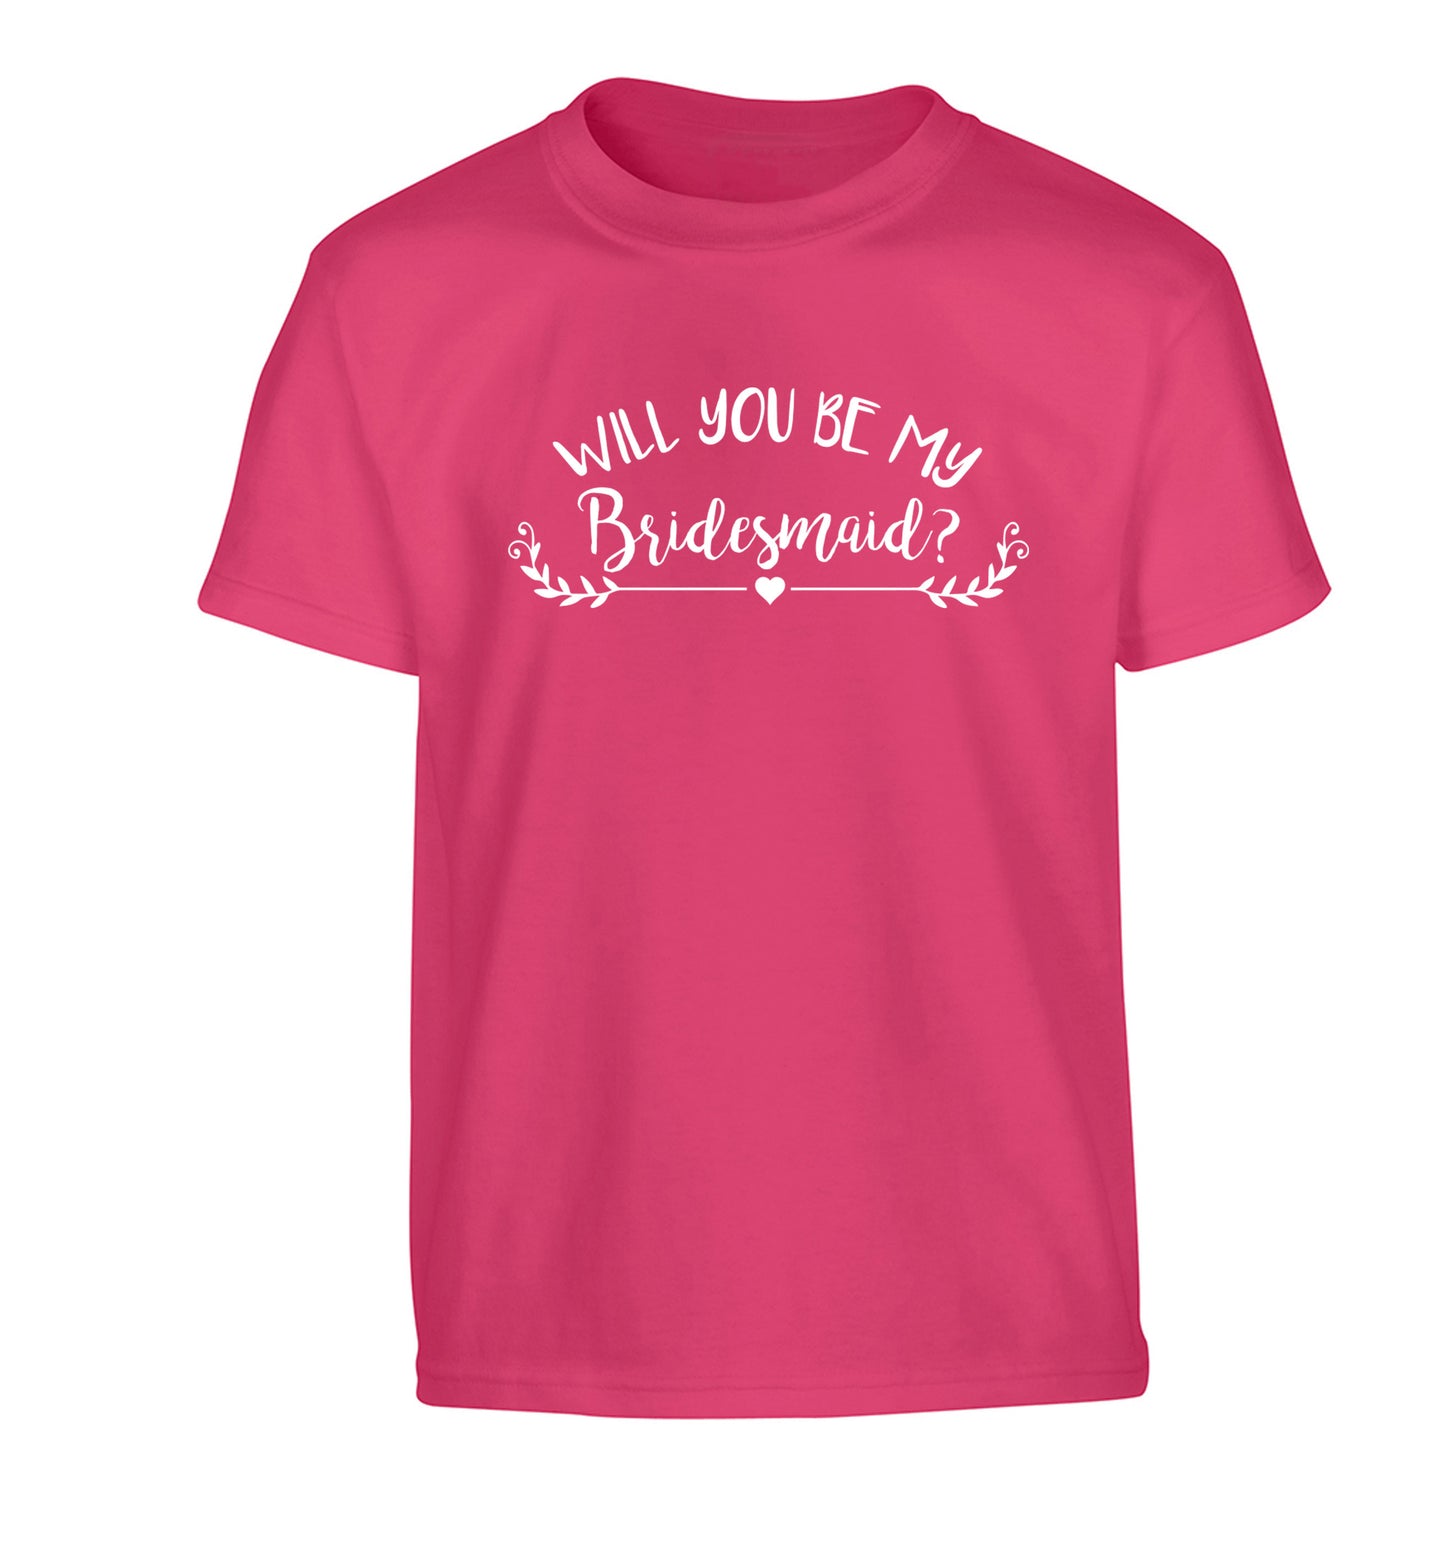 Will you be my bridesmaid? Children's pink Tshirt 12-14 Years